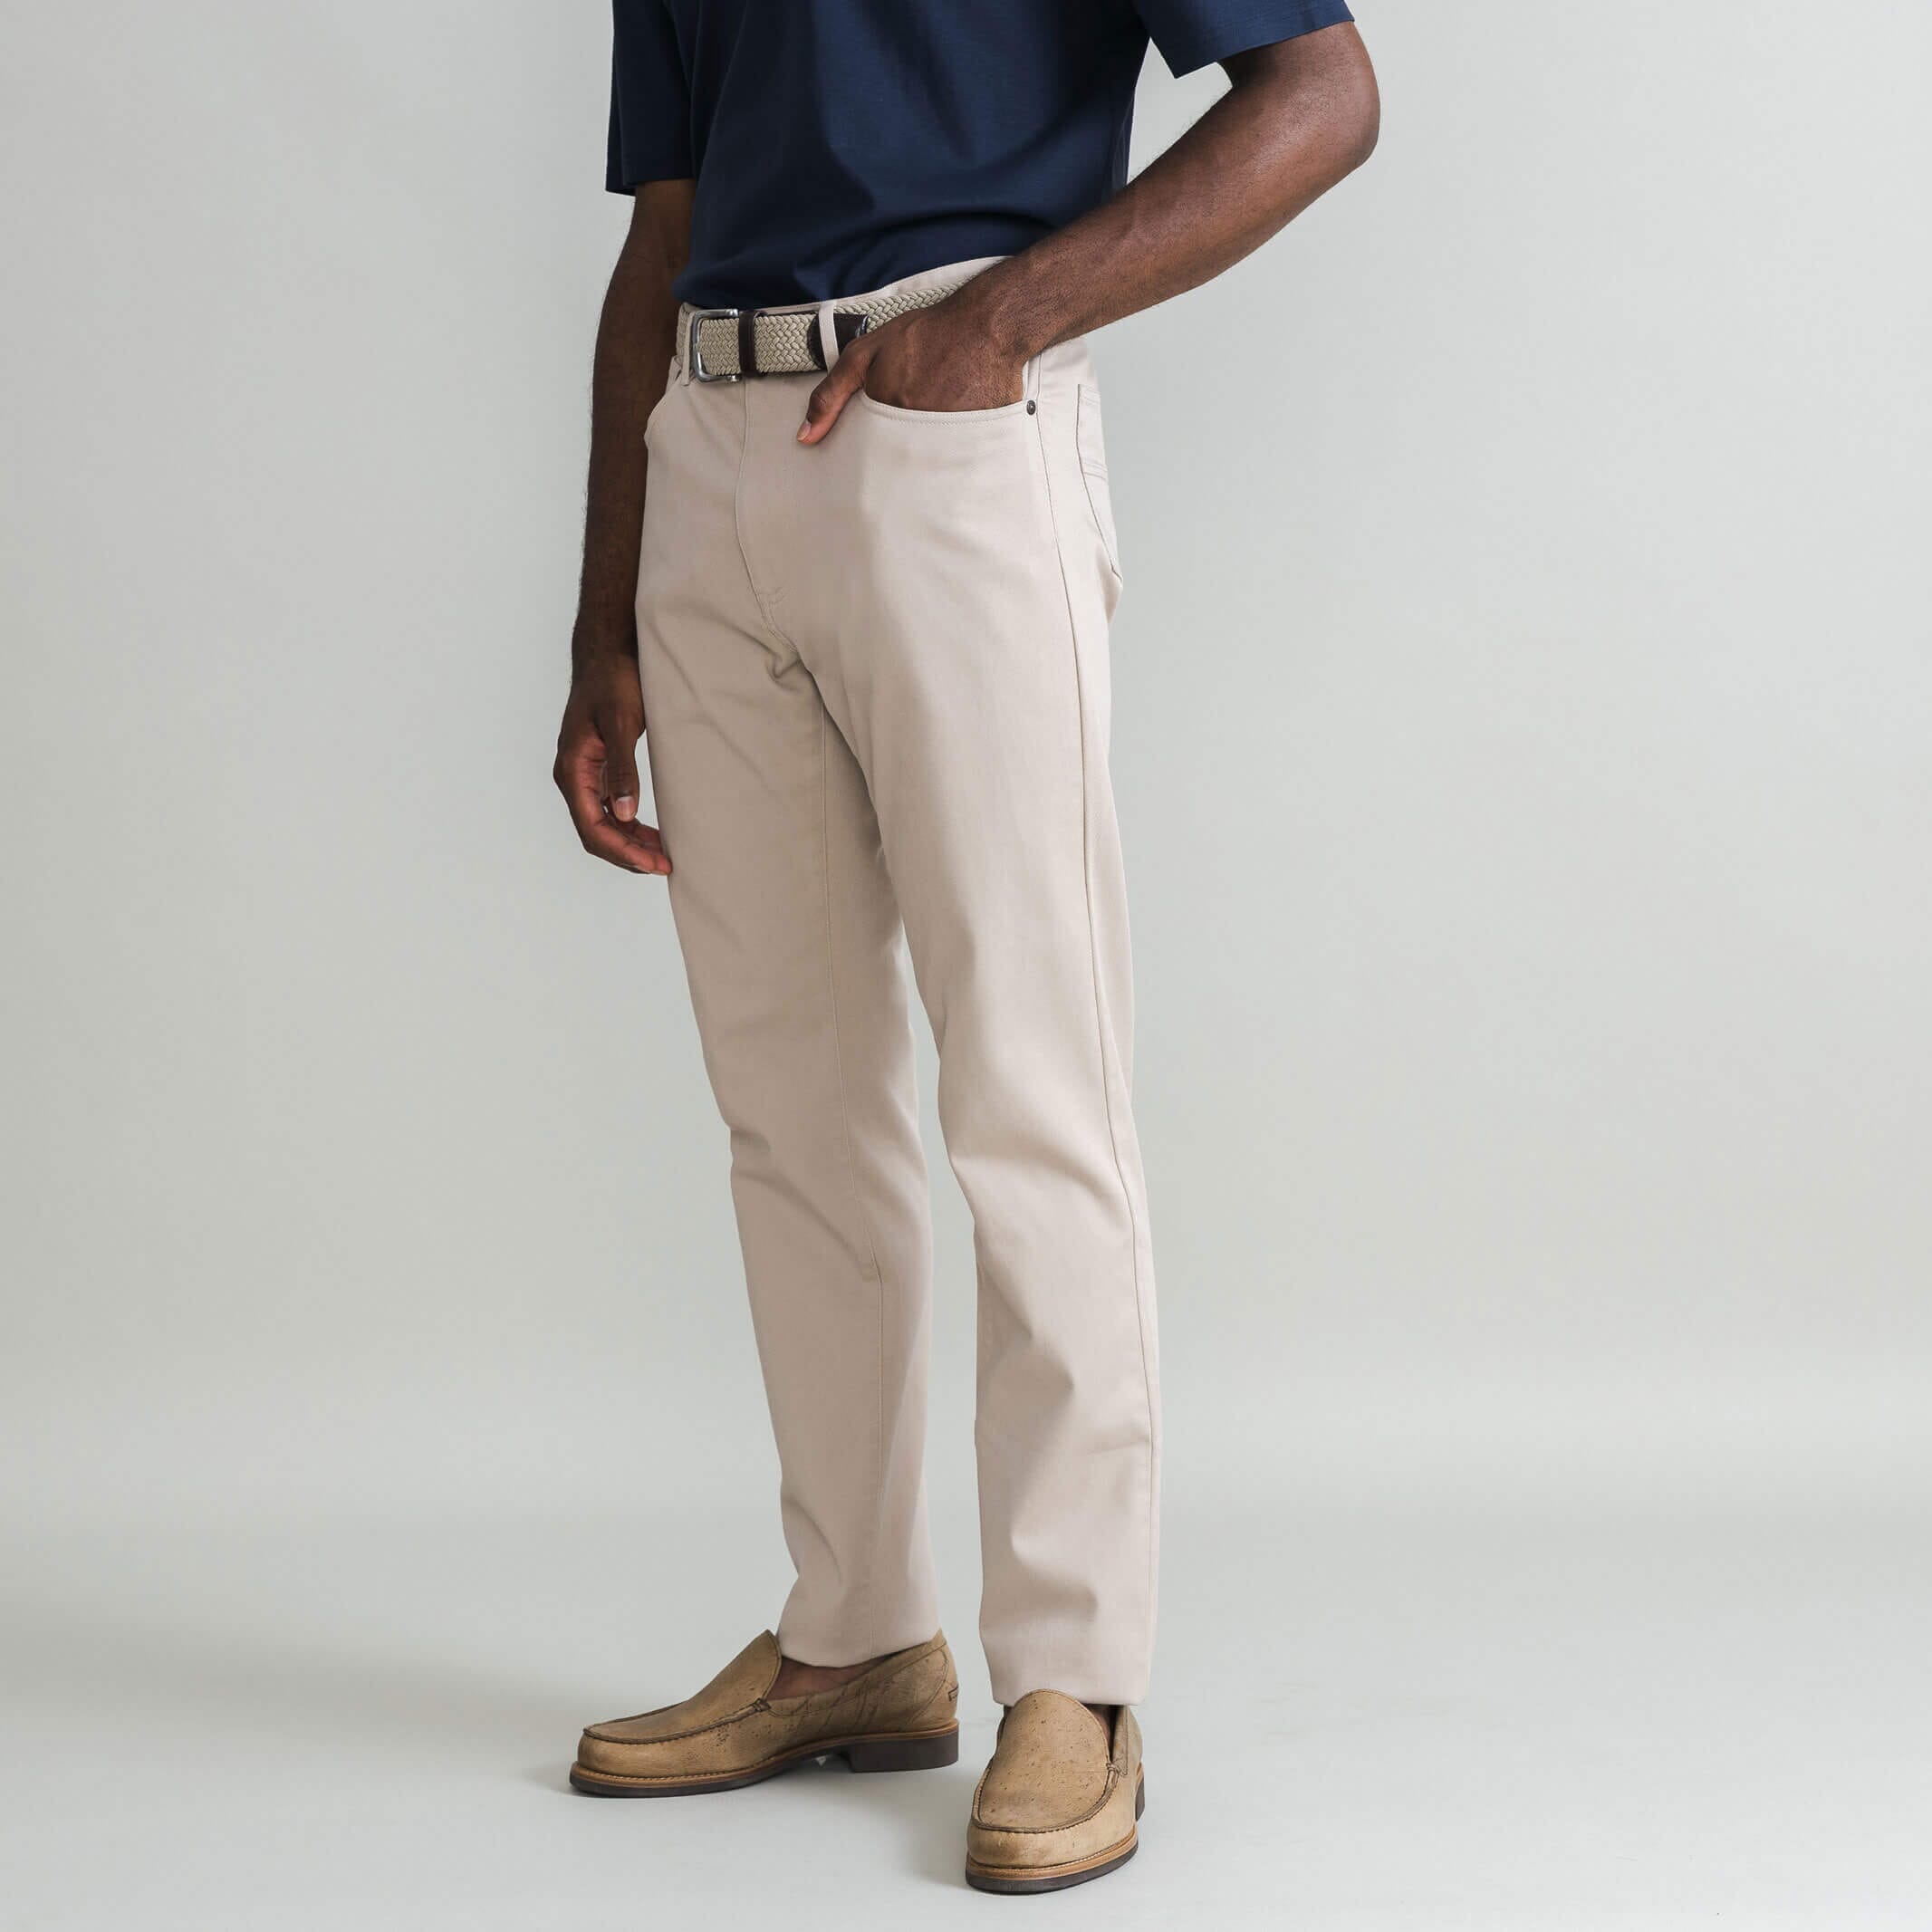 Khaki Tan Twill Trousers Design by Khara Kapas at Pernia's Pop Up Shop 2024